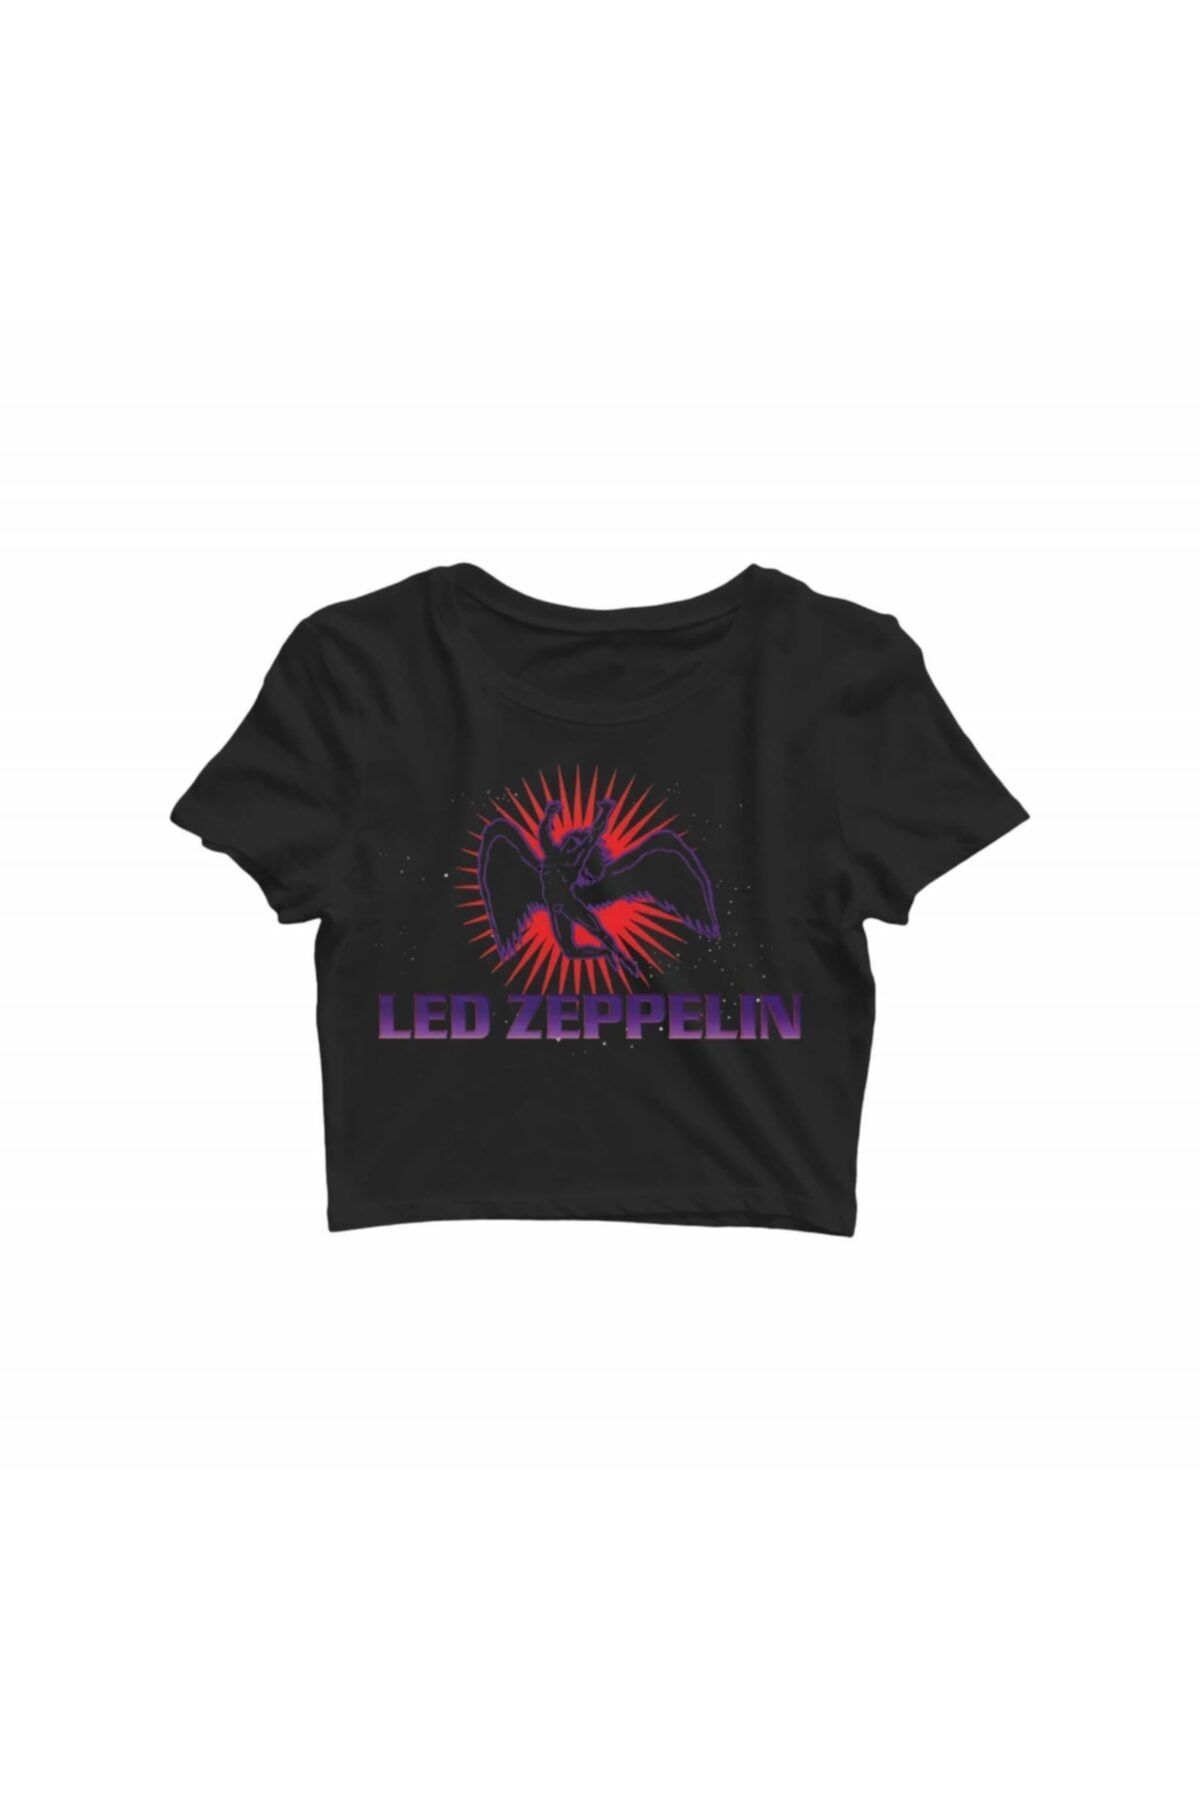 sisyphus Led Zeppelin Crop Top